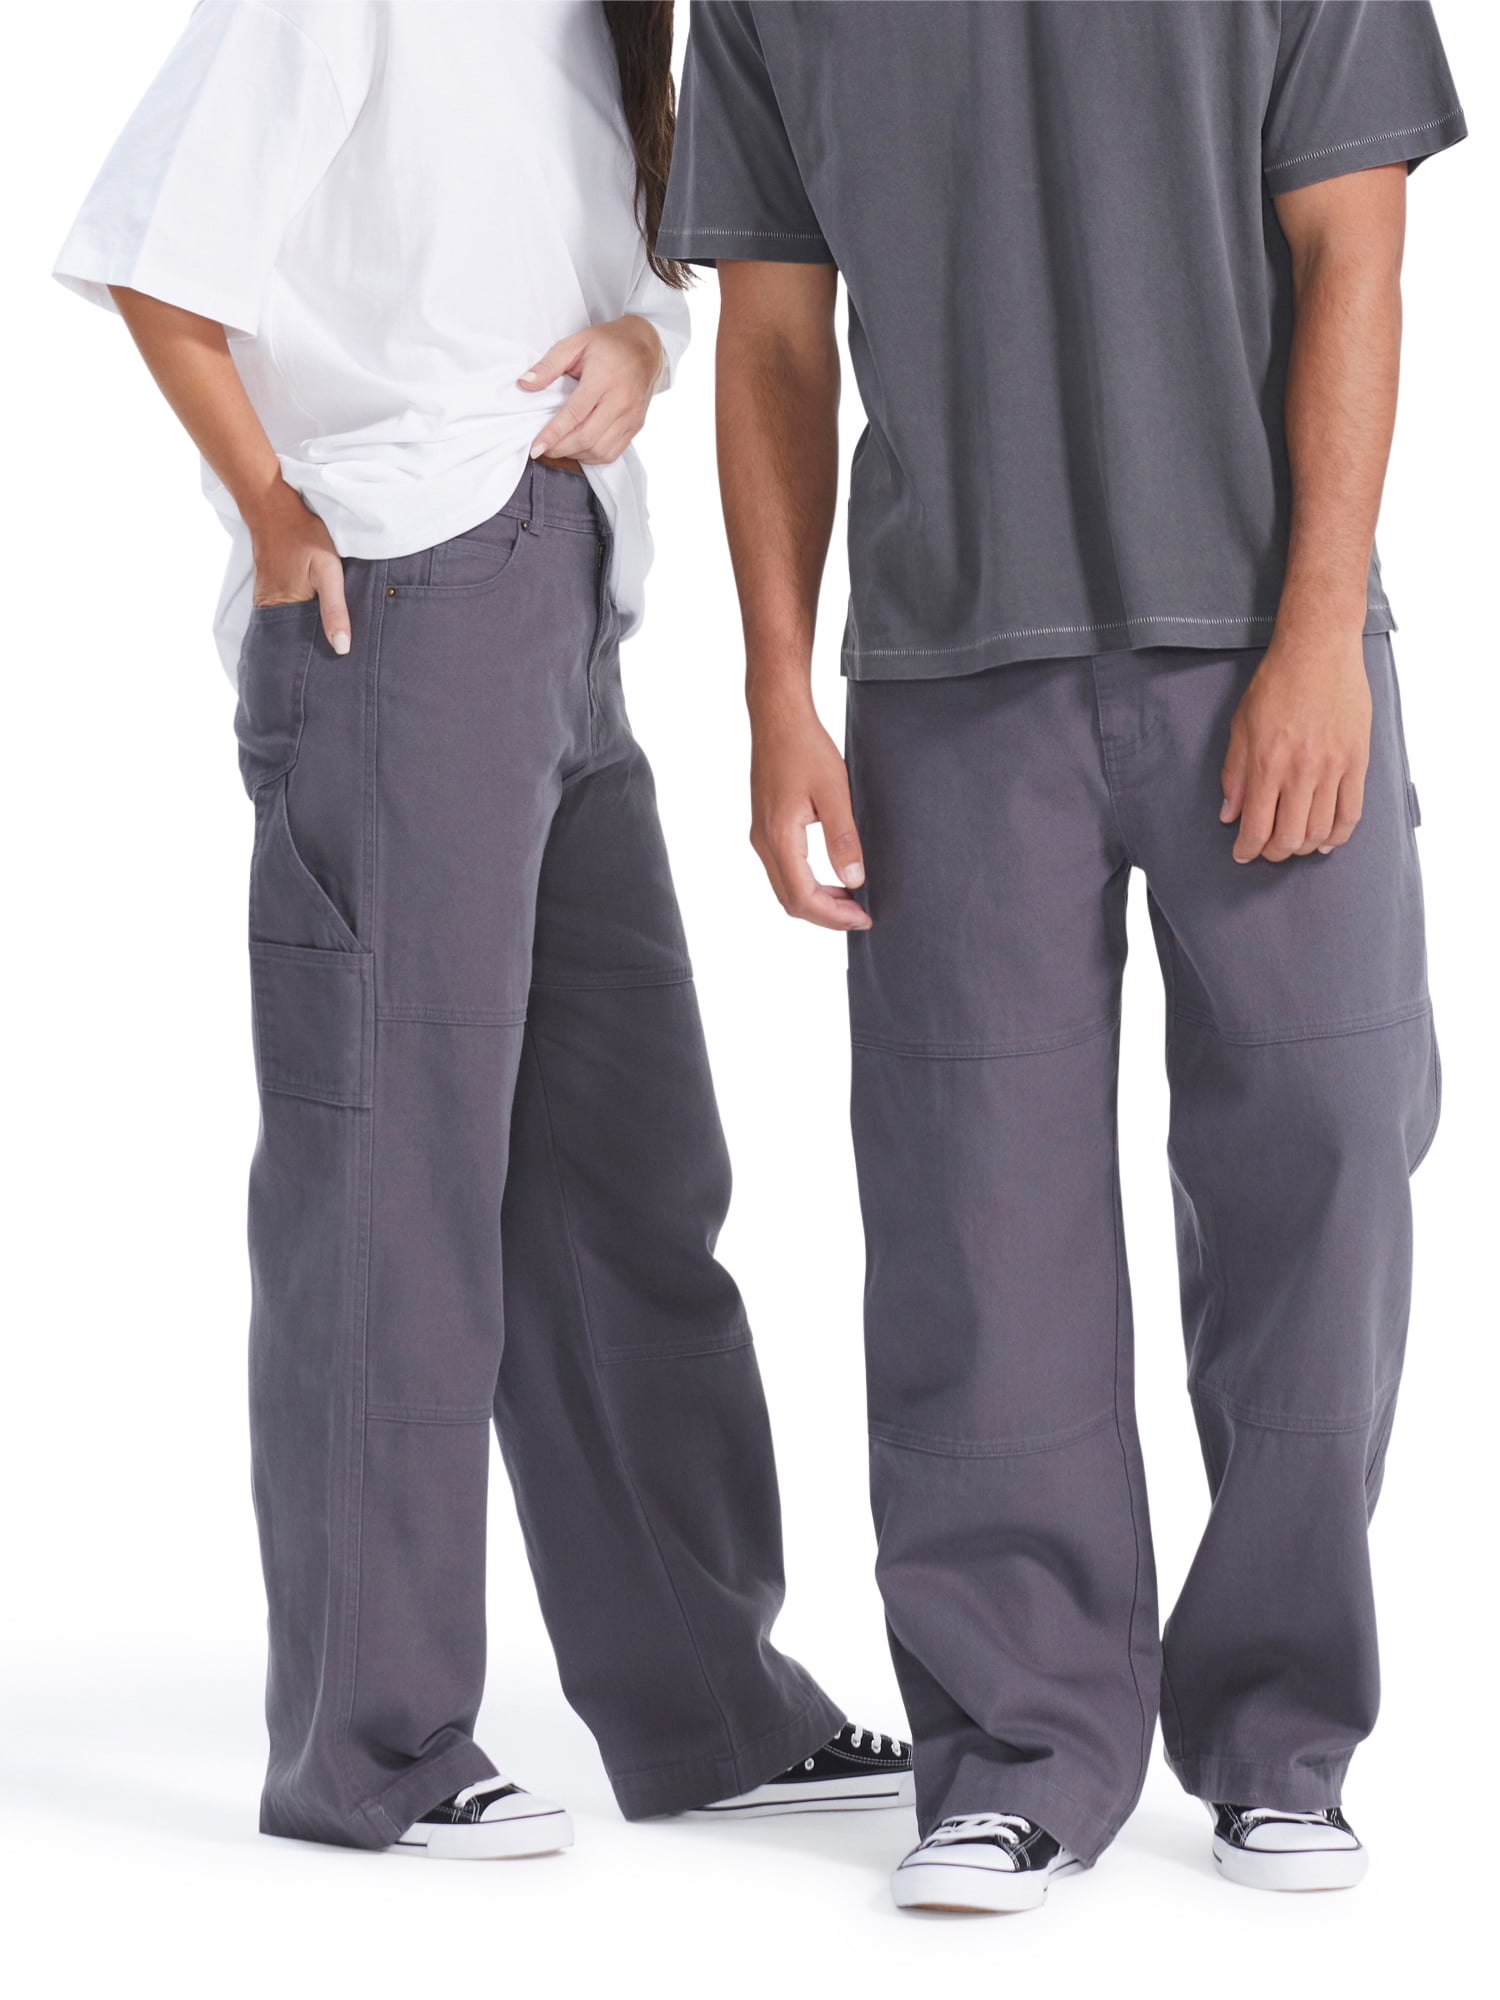 No Boundaries All Gender Carpenter Pants, Men's Sizes 28 - 44 